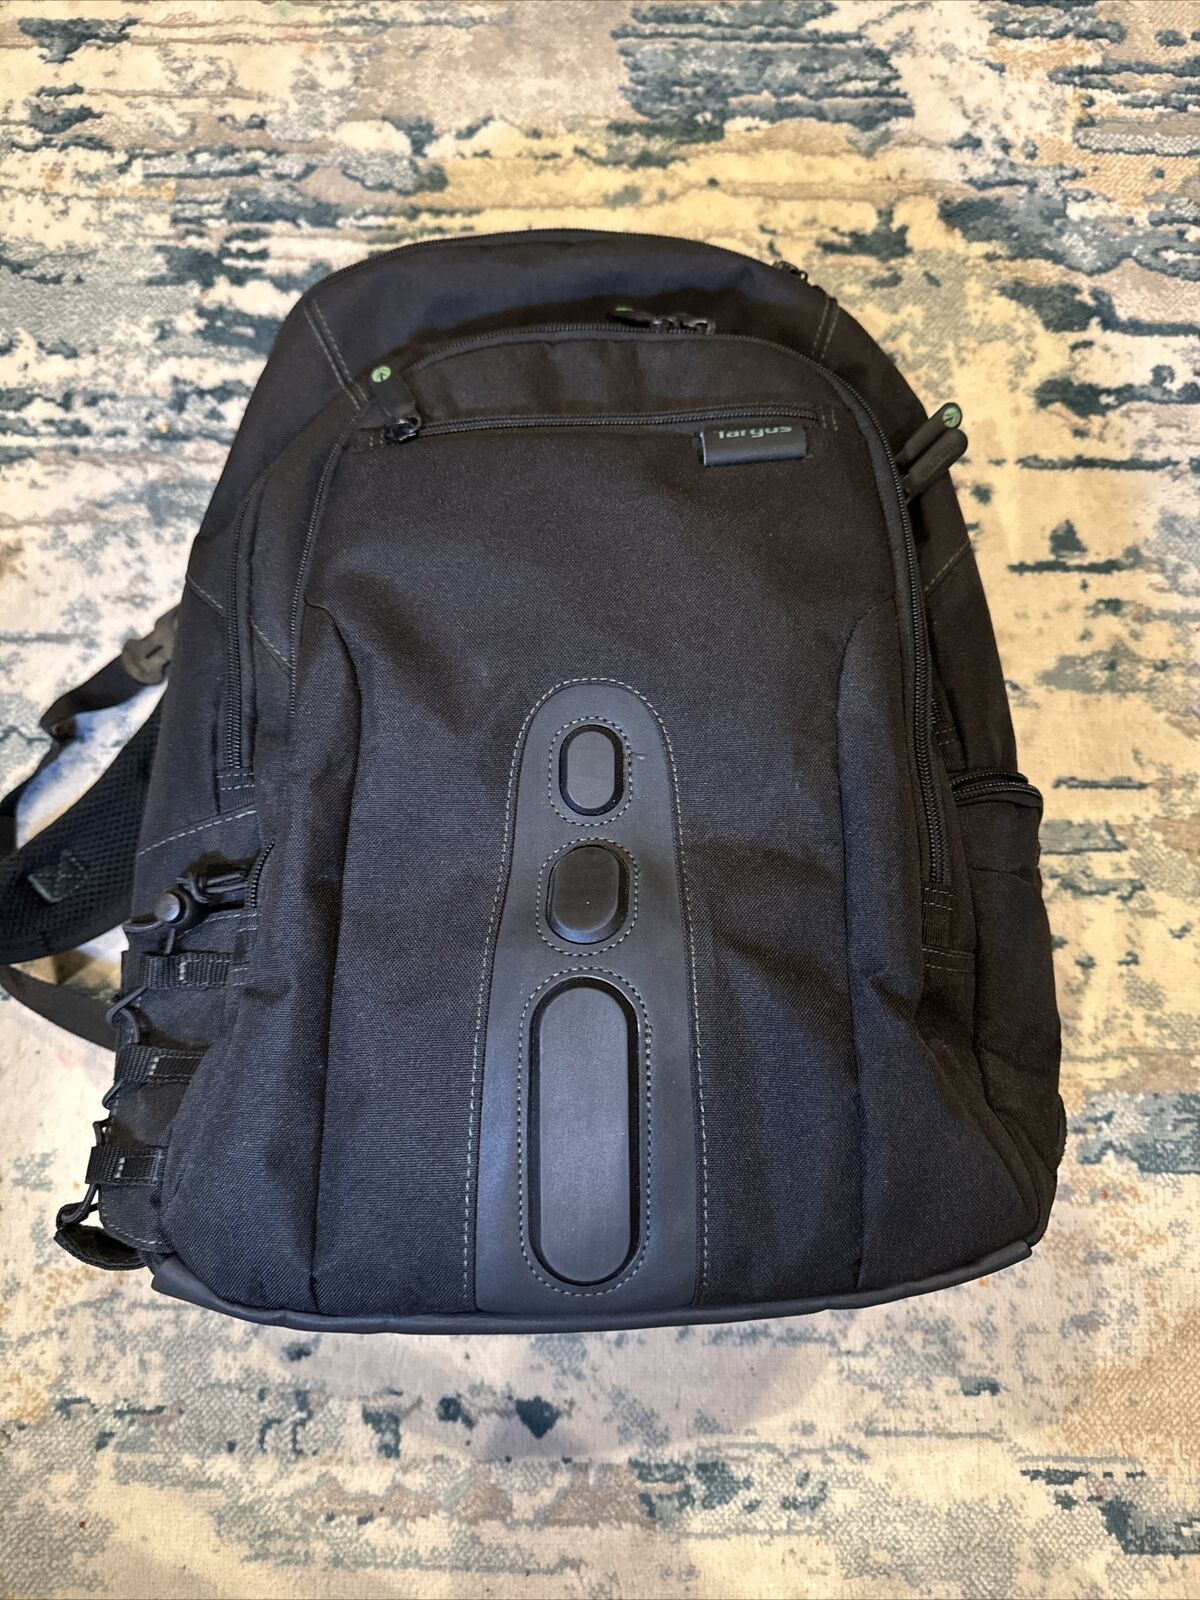 Targus Black/Spruce EcoSmart 15.6 Laptop Backpack TBB013US-71 - Heavyduty